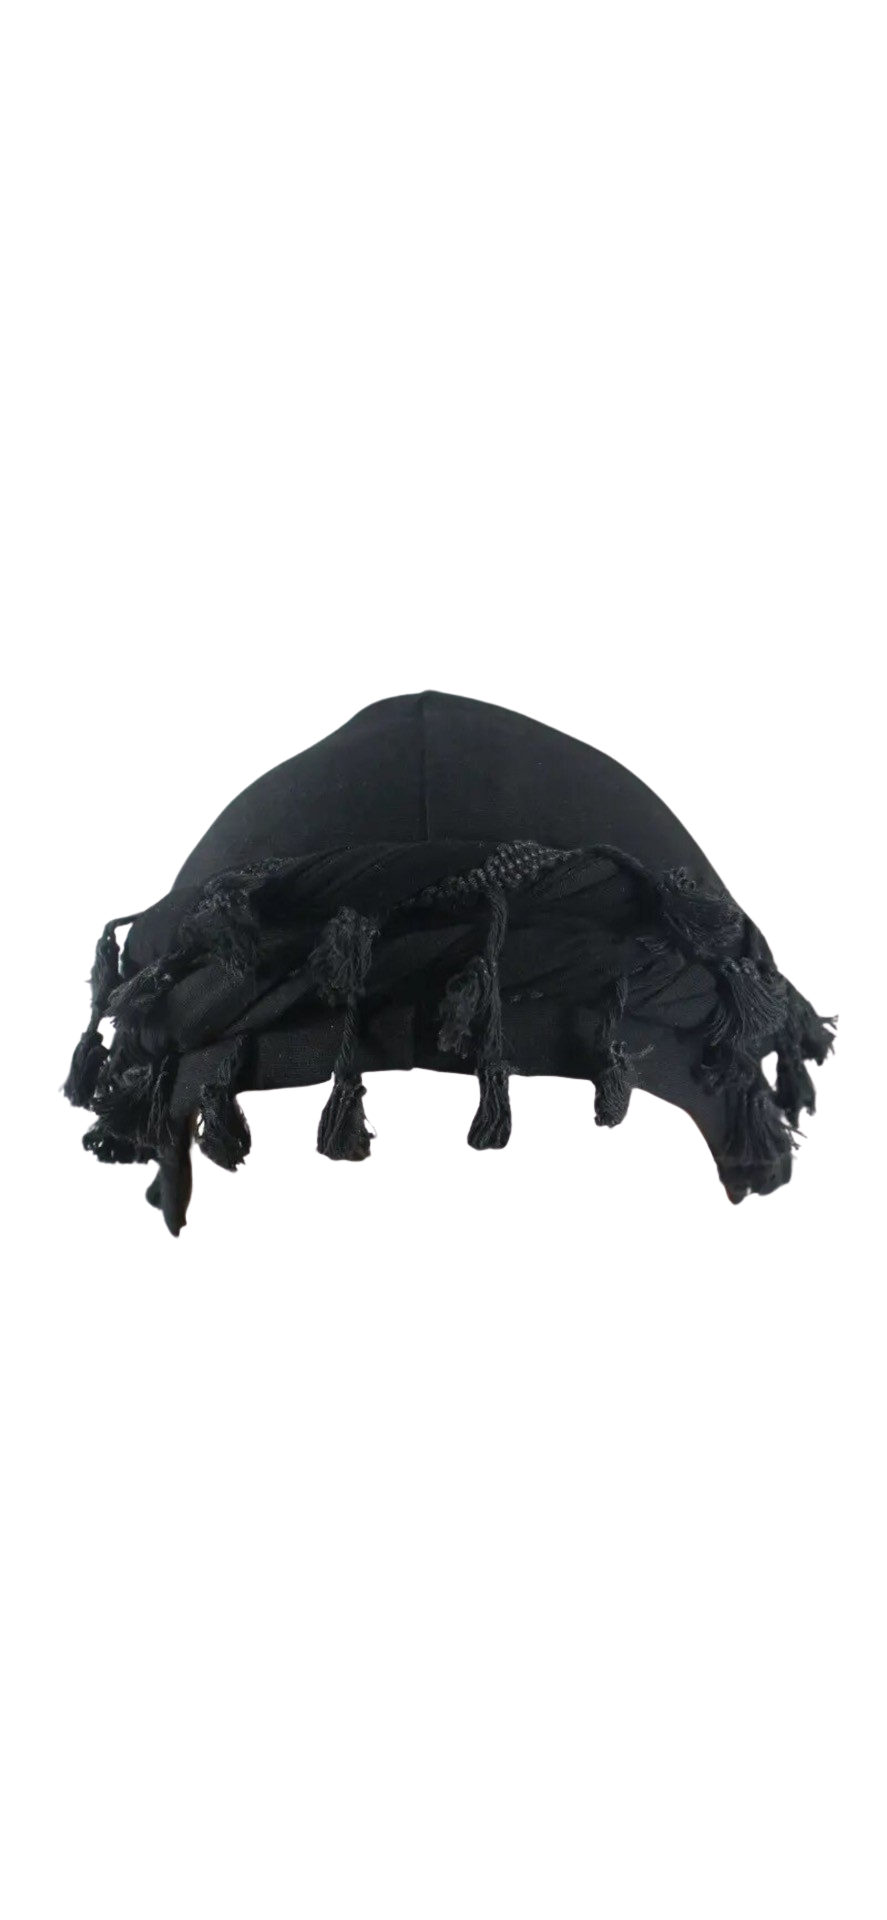 Legendary Distressed Black Satin Lined Turban